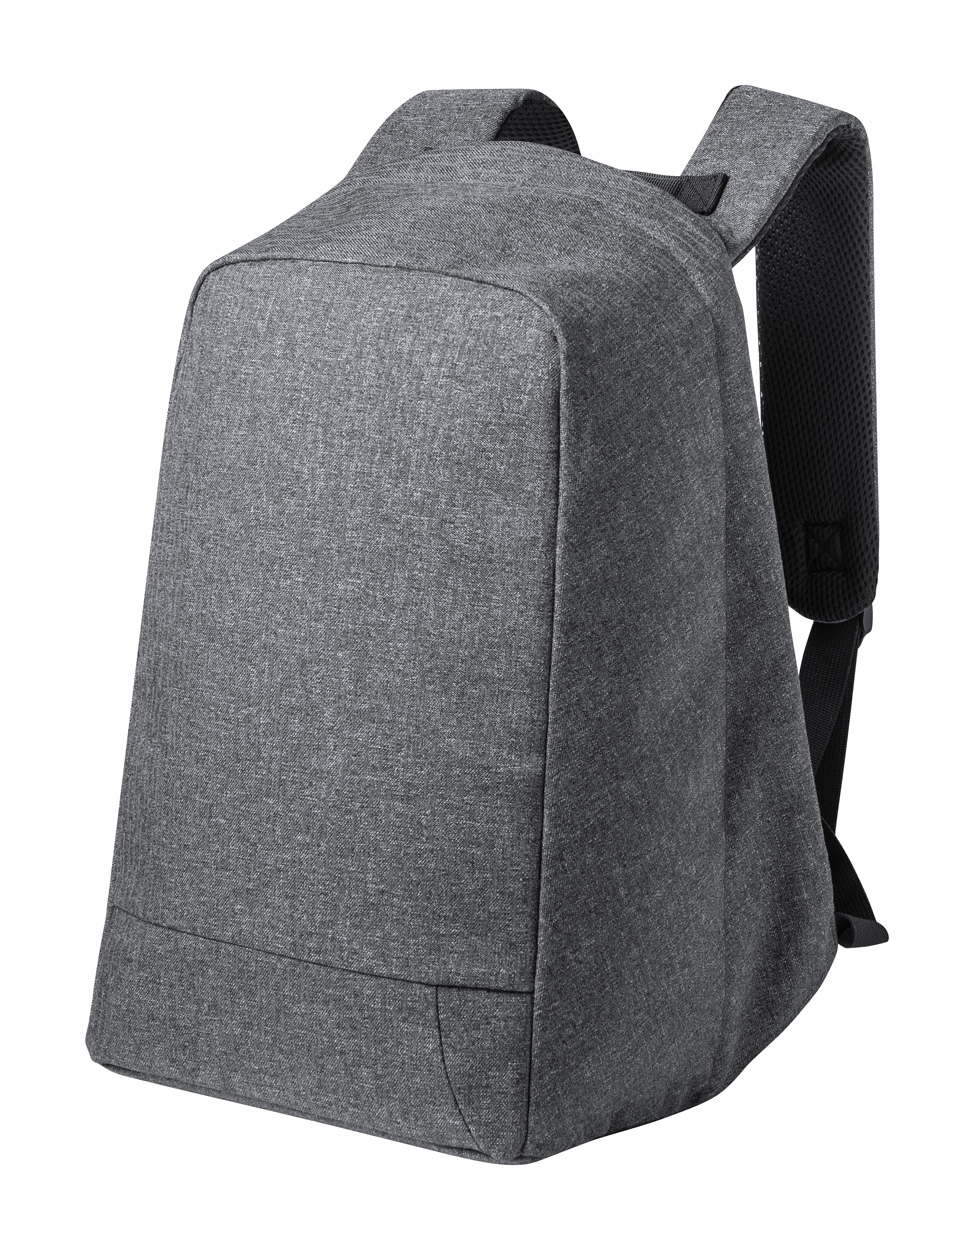 Quasar anti-theft backpack